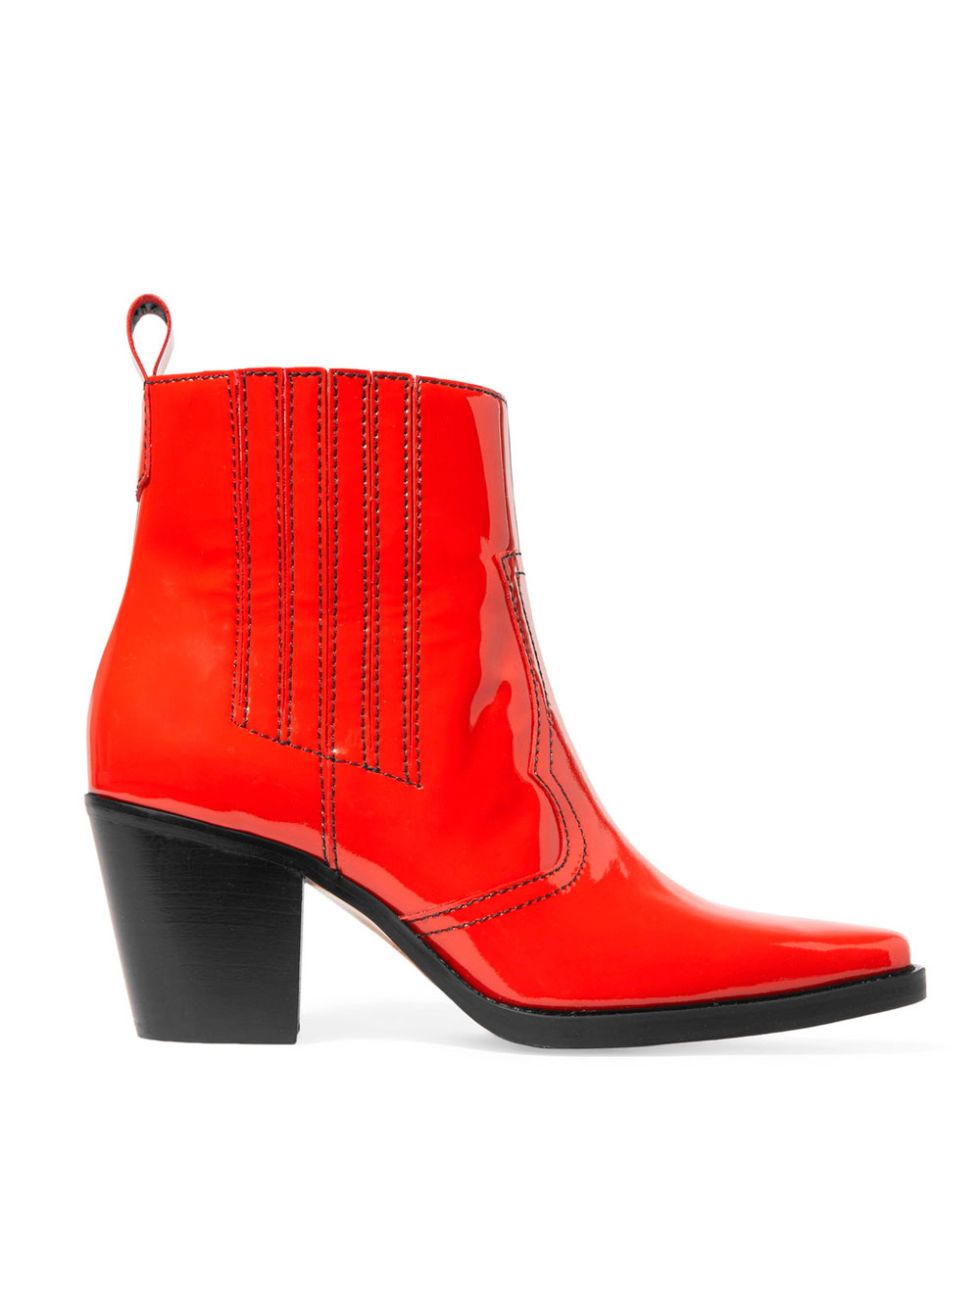 Footwear, Red, Boot, Shoe, Orange, High heels, Leather, 